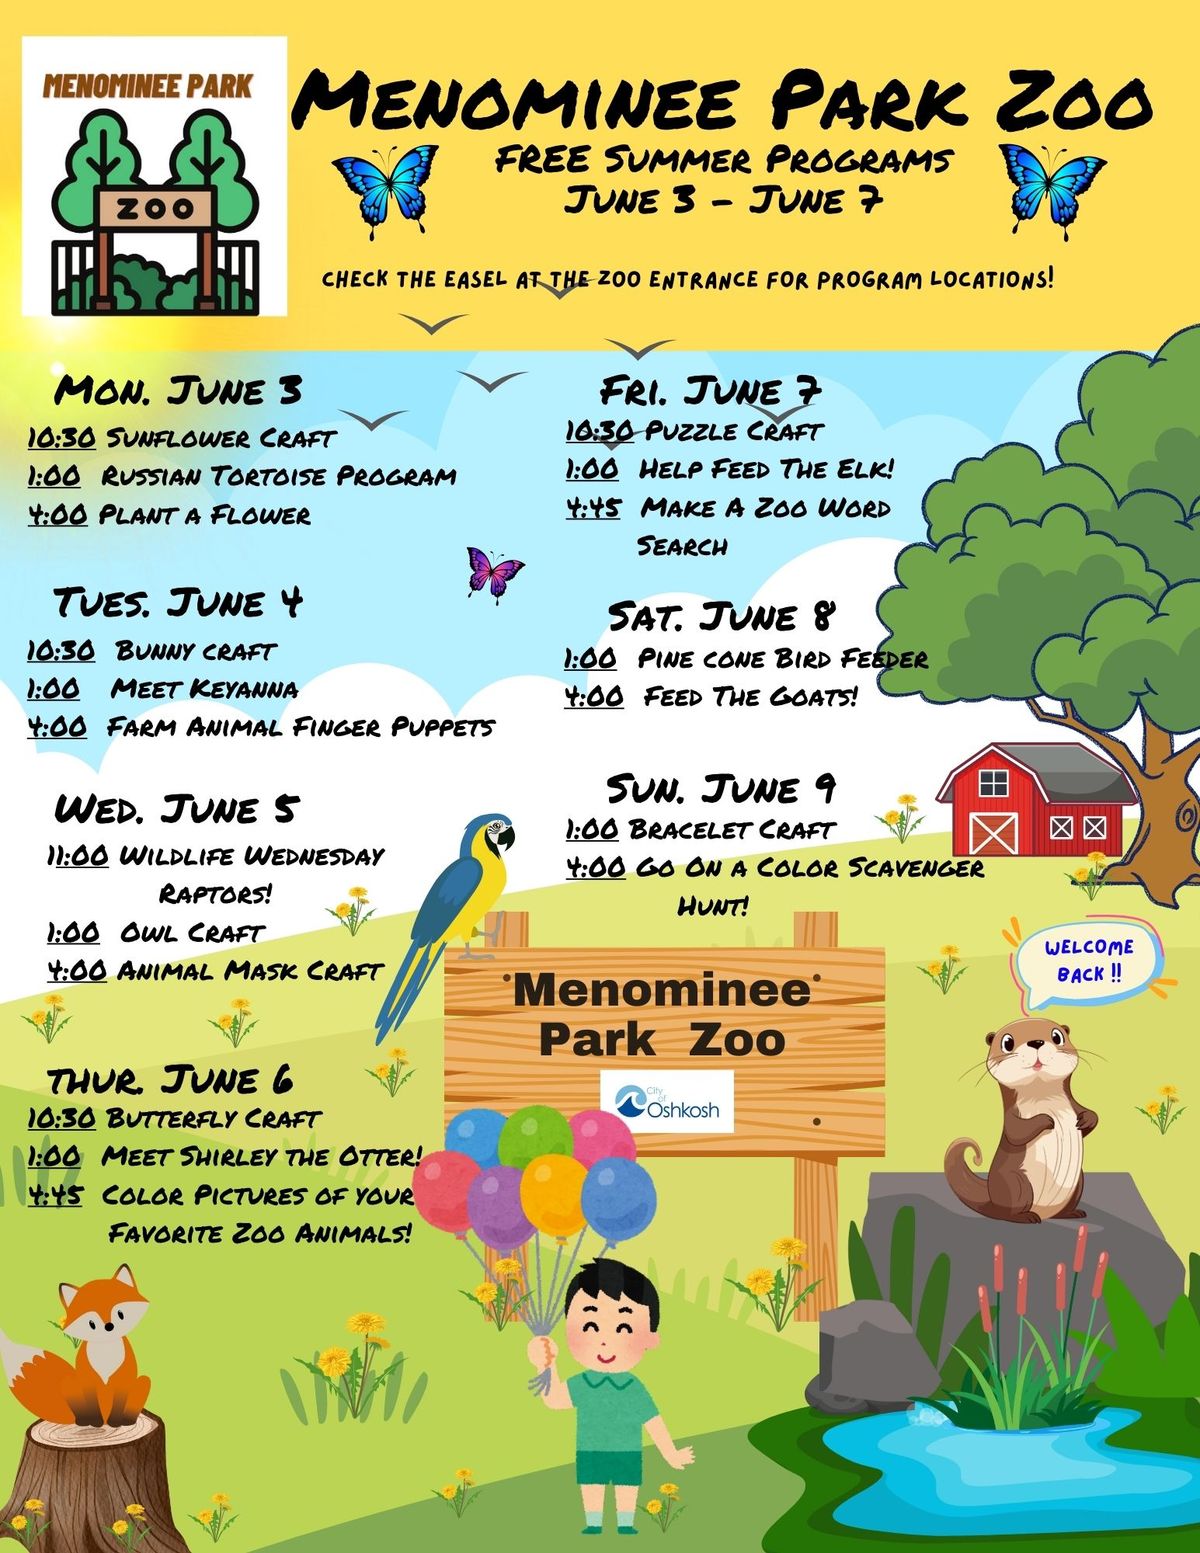 Menominee Park Zoo Free Summer Programs June 5 to June 11